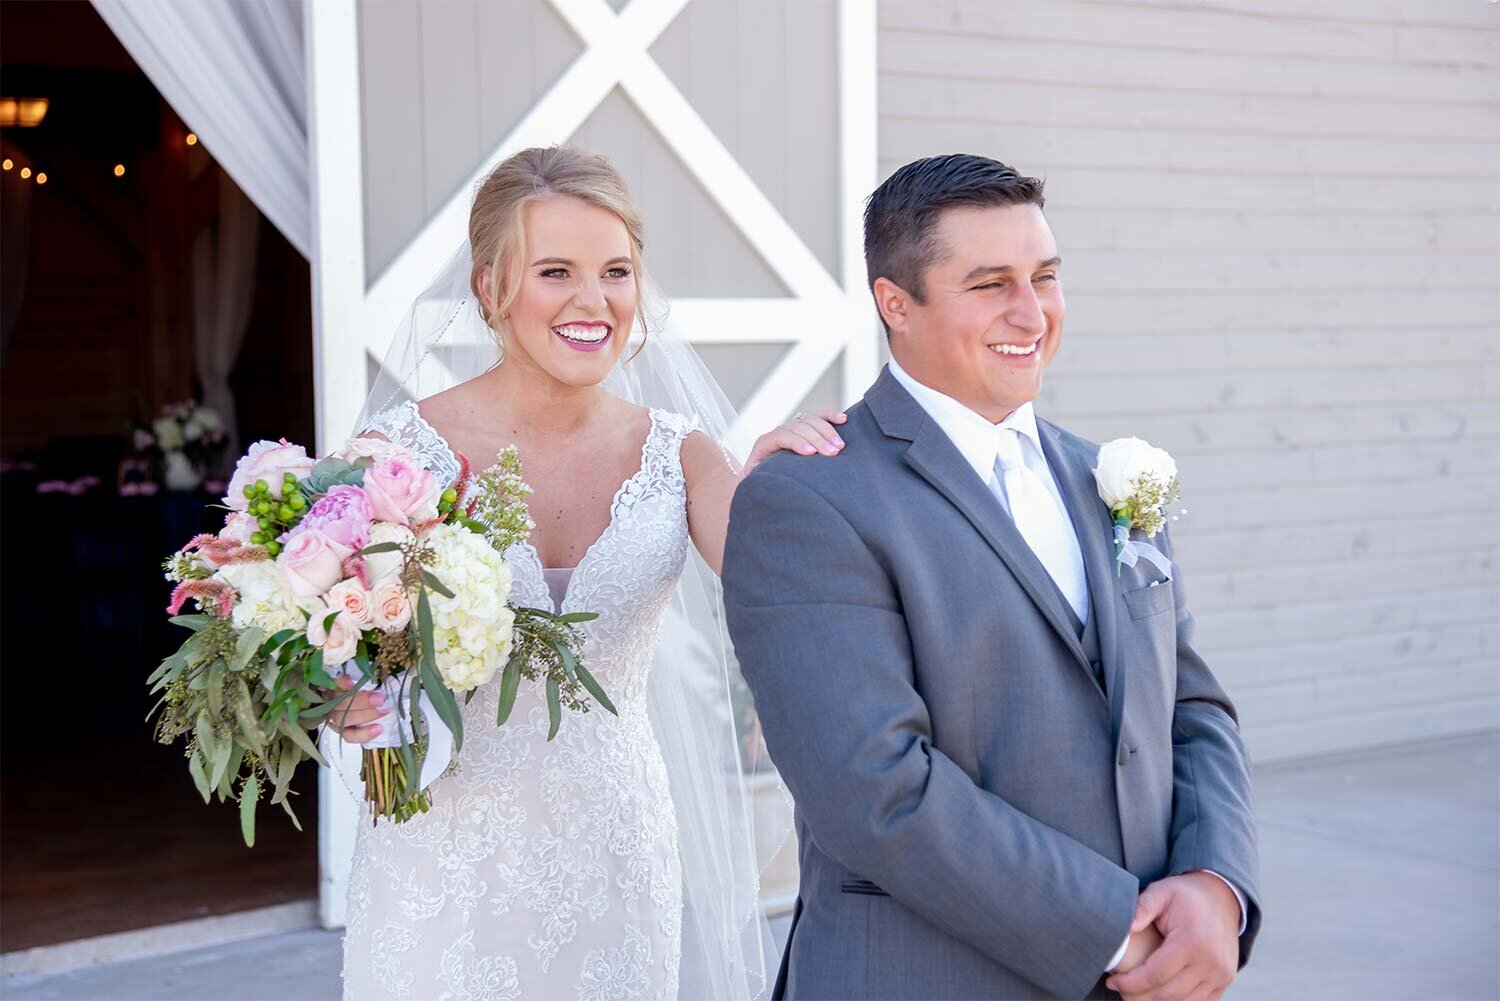 wedding-photographer-photography-okc-edmond-oklahoma-city-beautiful-bride-groom-first-look-portrait-bouquet-barn-chadandbriephotography.jpg